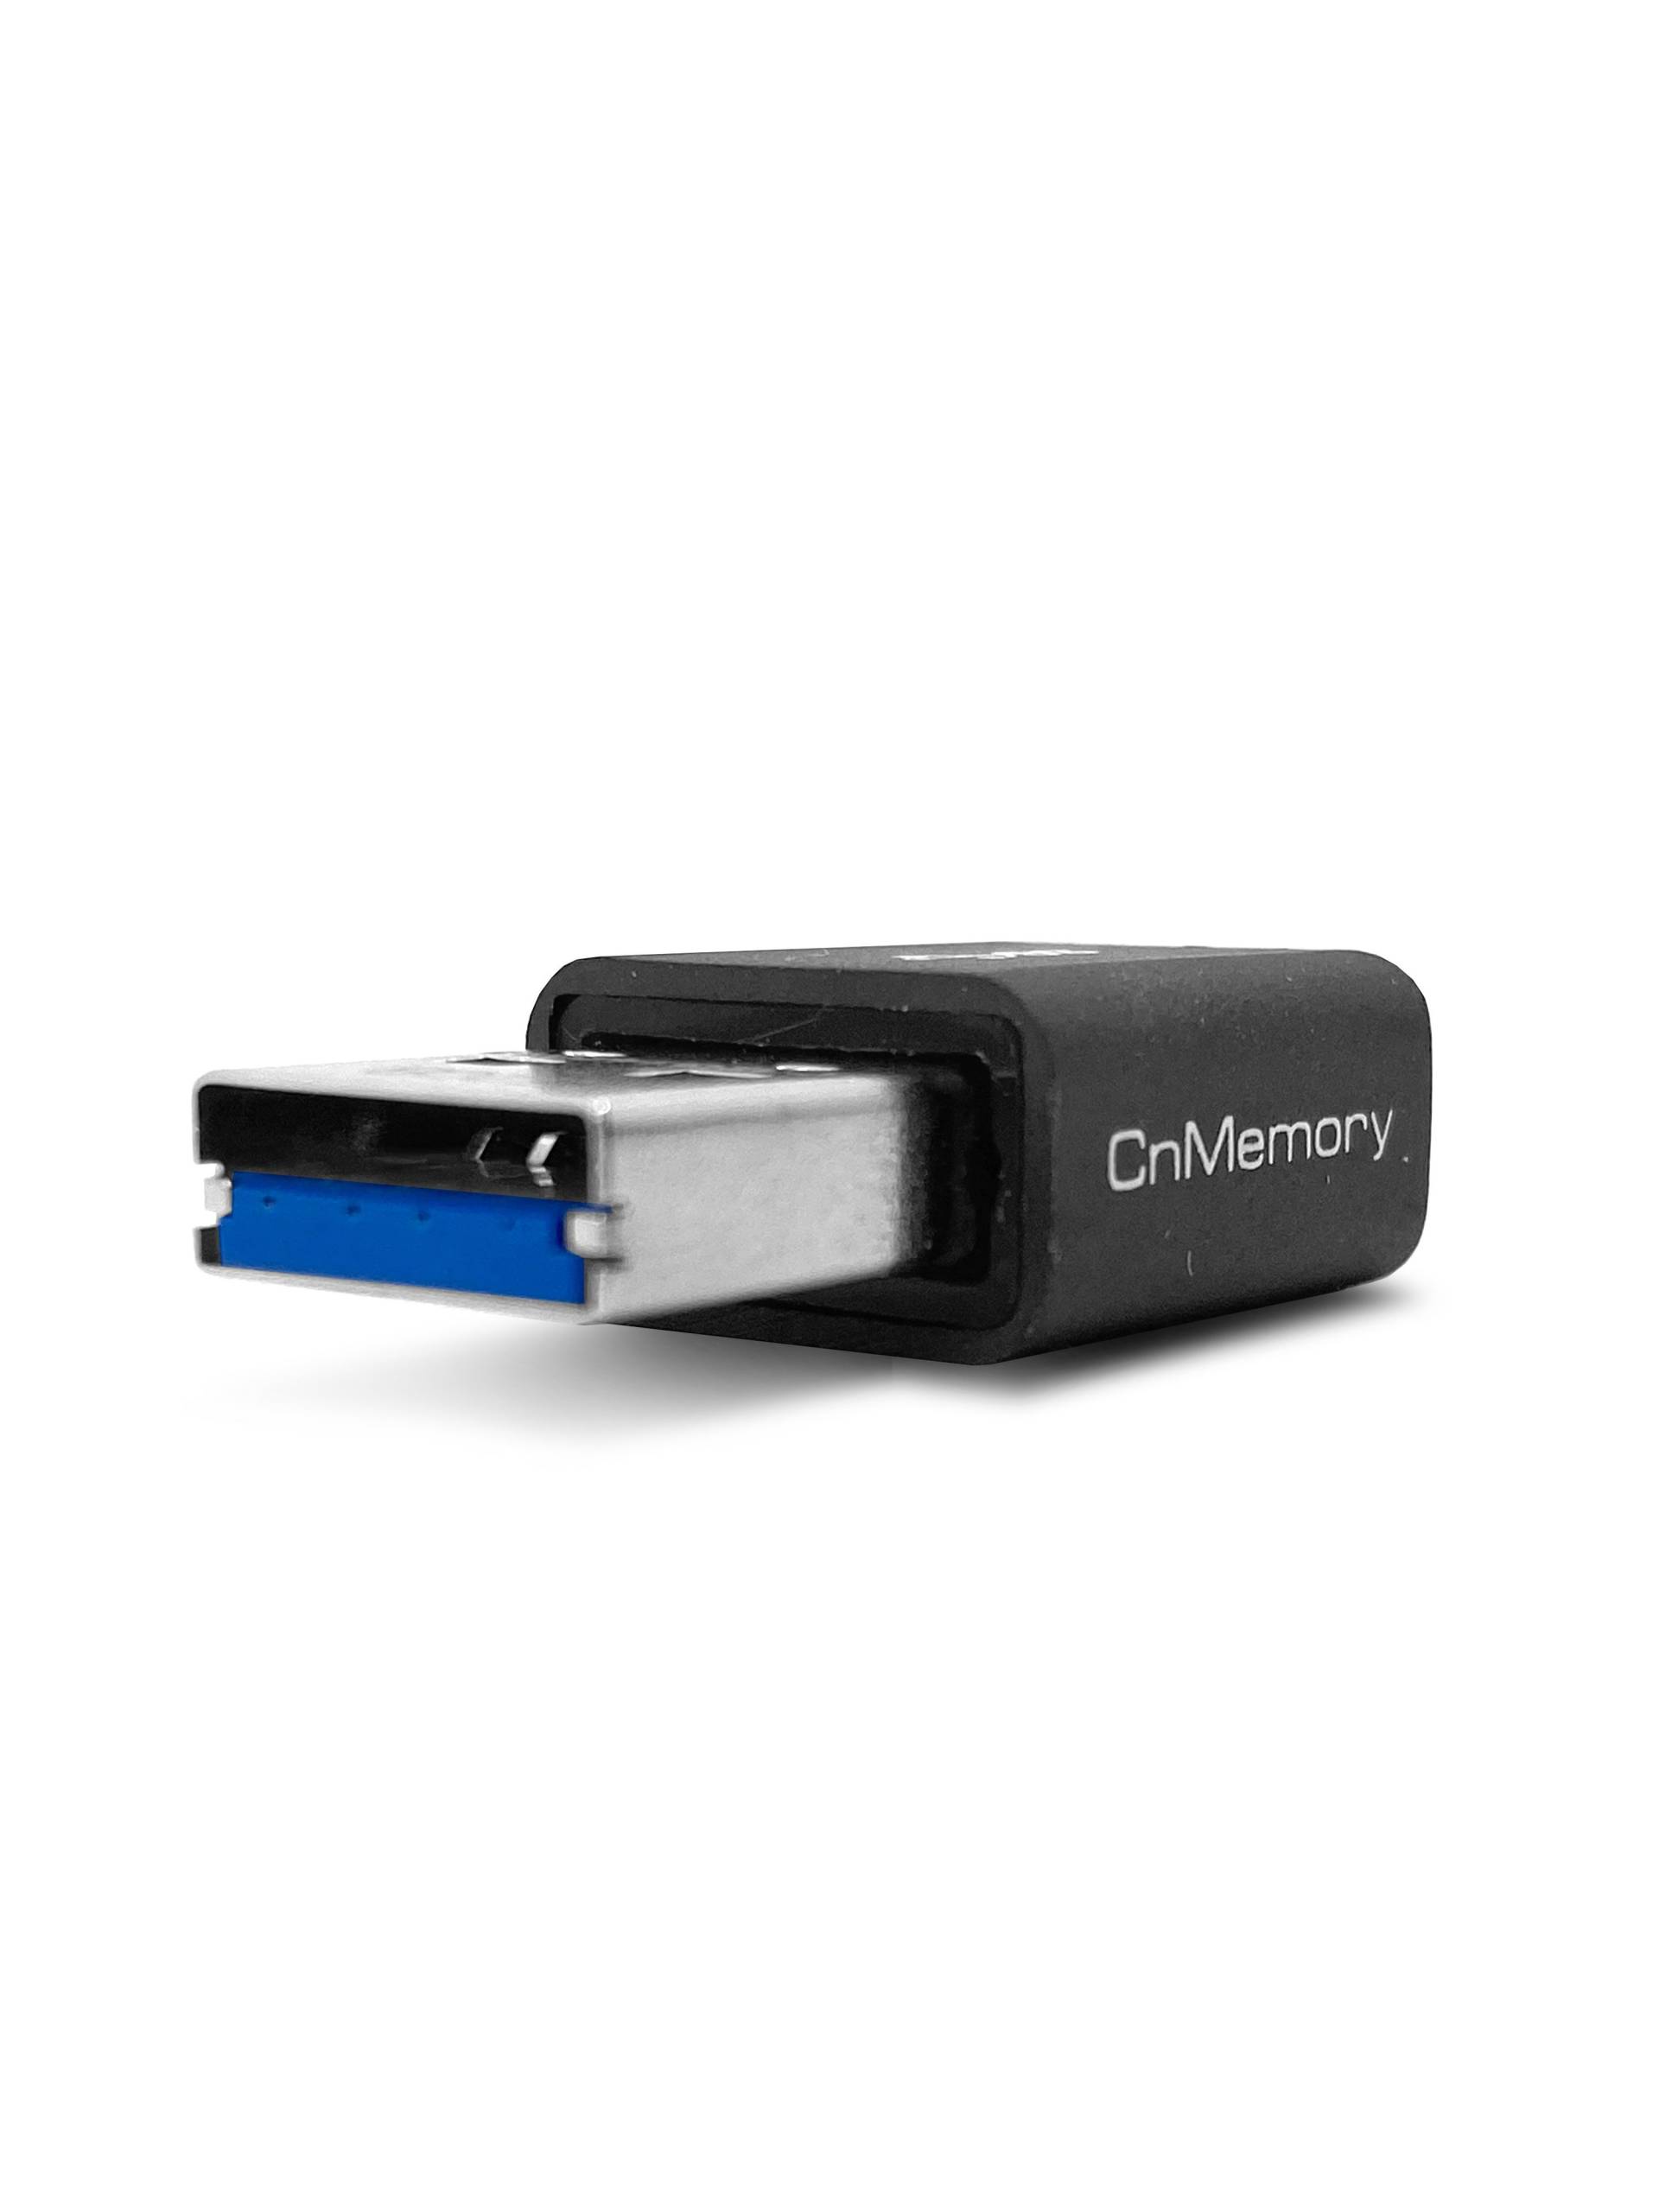 USB Memorystick 32 GB von CnMemory